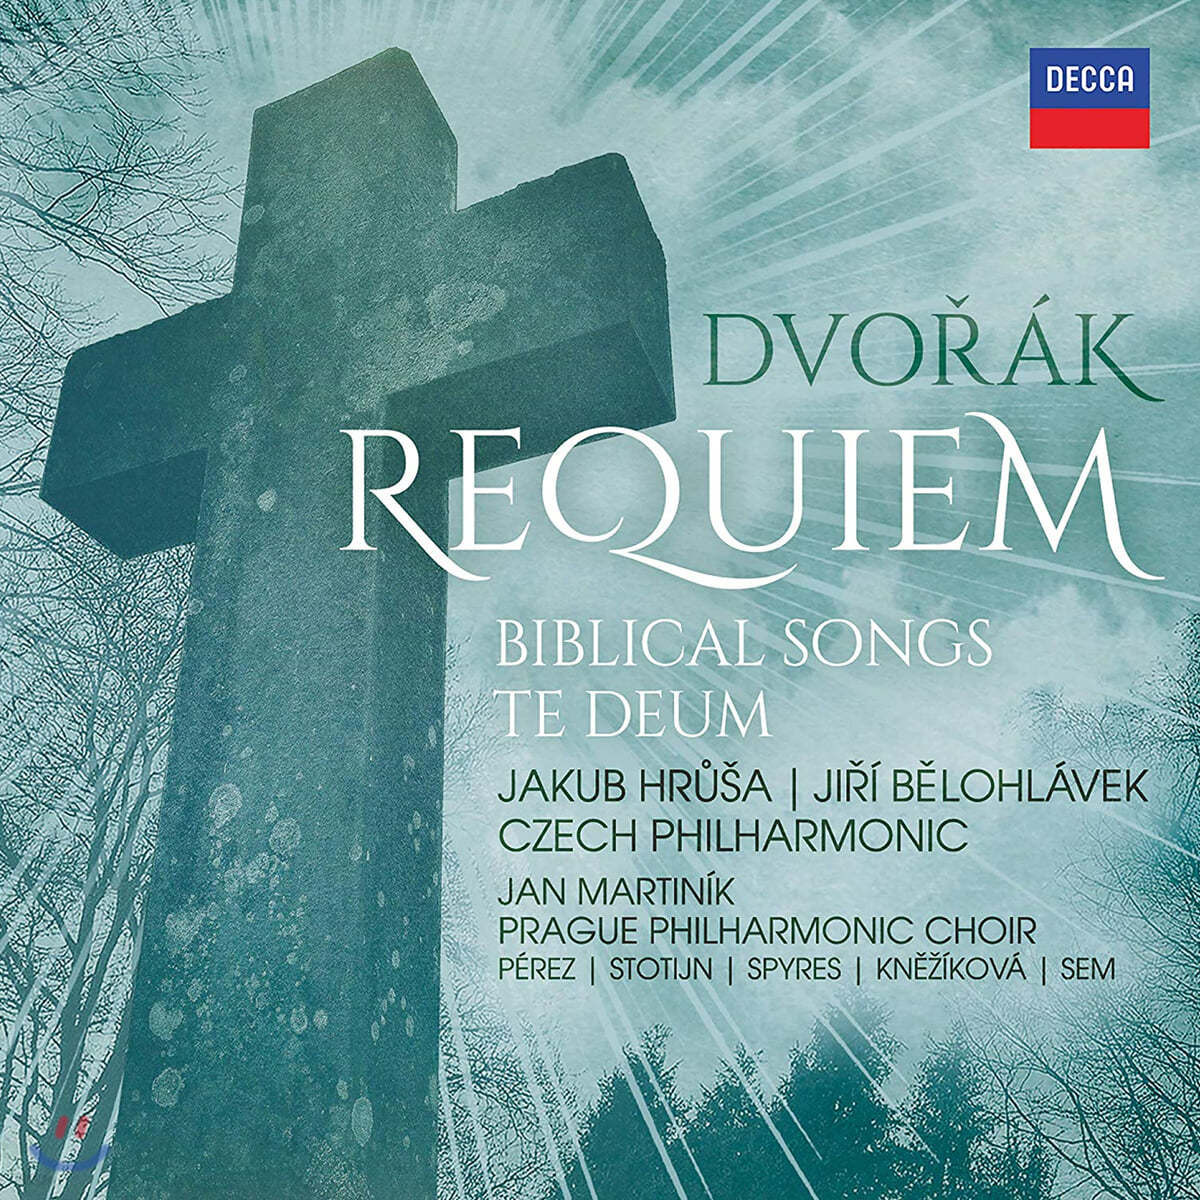 Jiri Belohlavek 드보르작: 레퀴엠, 테데움, 성서의 노래 (Dvorak: Requiem, Biblical Songs, Te Deum)